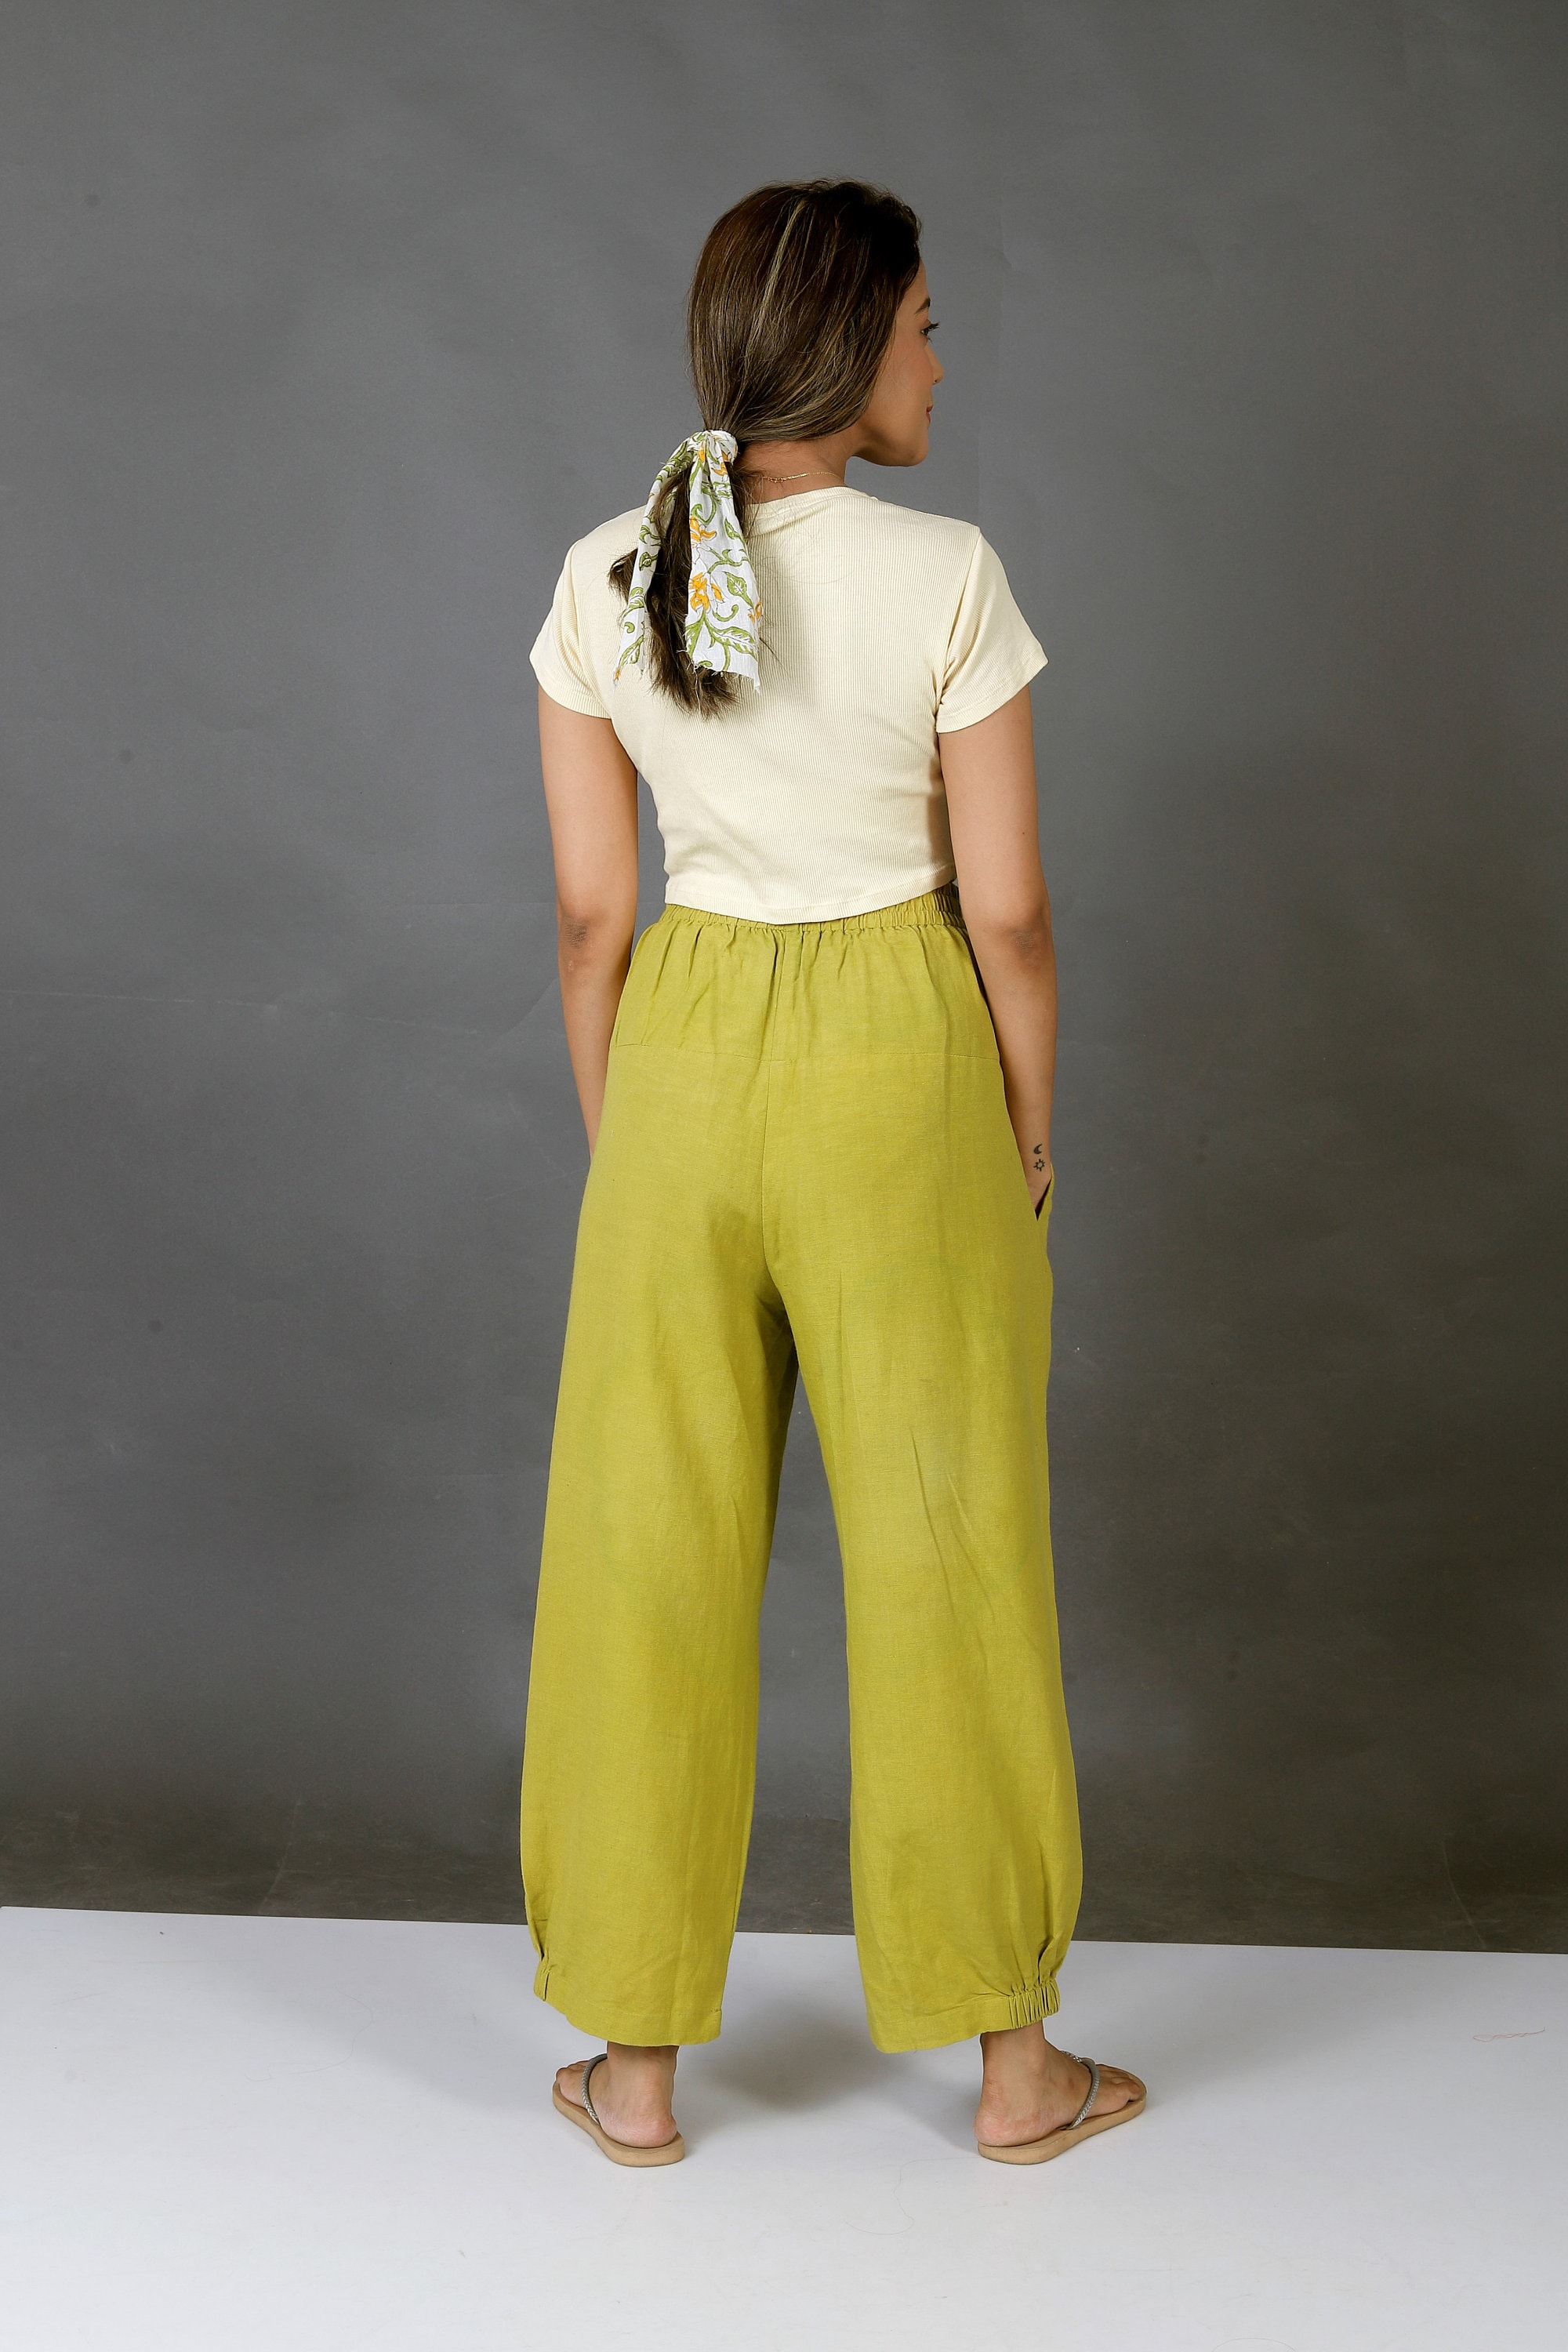 Unisex Apple Green Pants for Women, Custom Made Baggy Pant